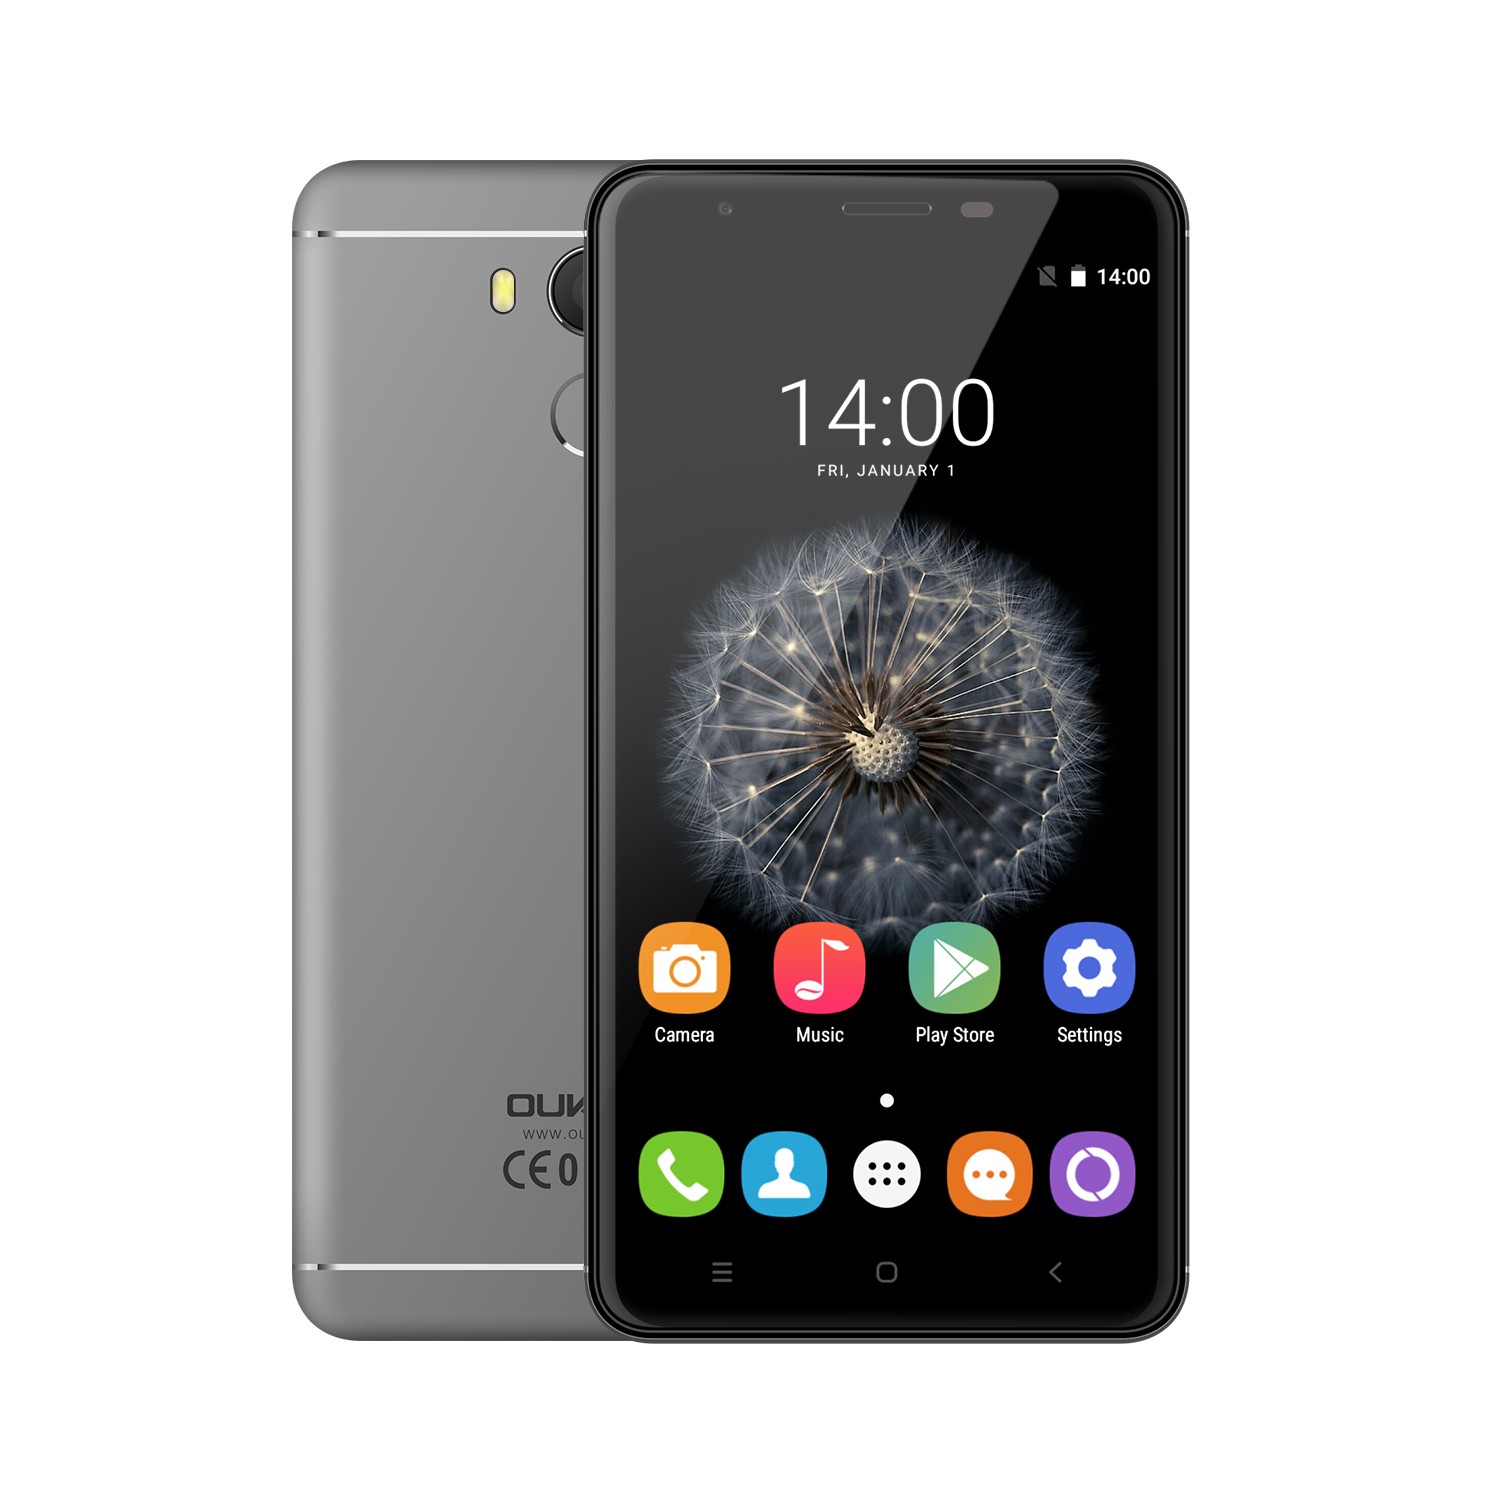 

Oukitel U15 Pro 5.5 inch 2.5D Fingerprint 3GB RAM 32GB ROM MTK6753 Octa Core 1.3GHz 4G Smartphone